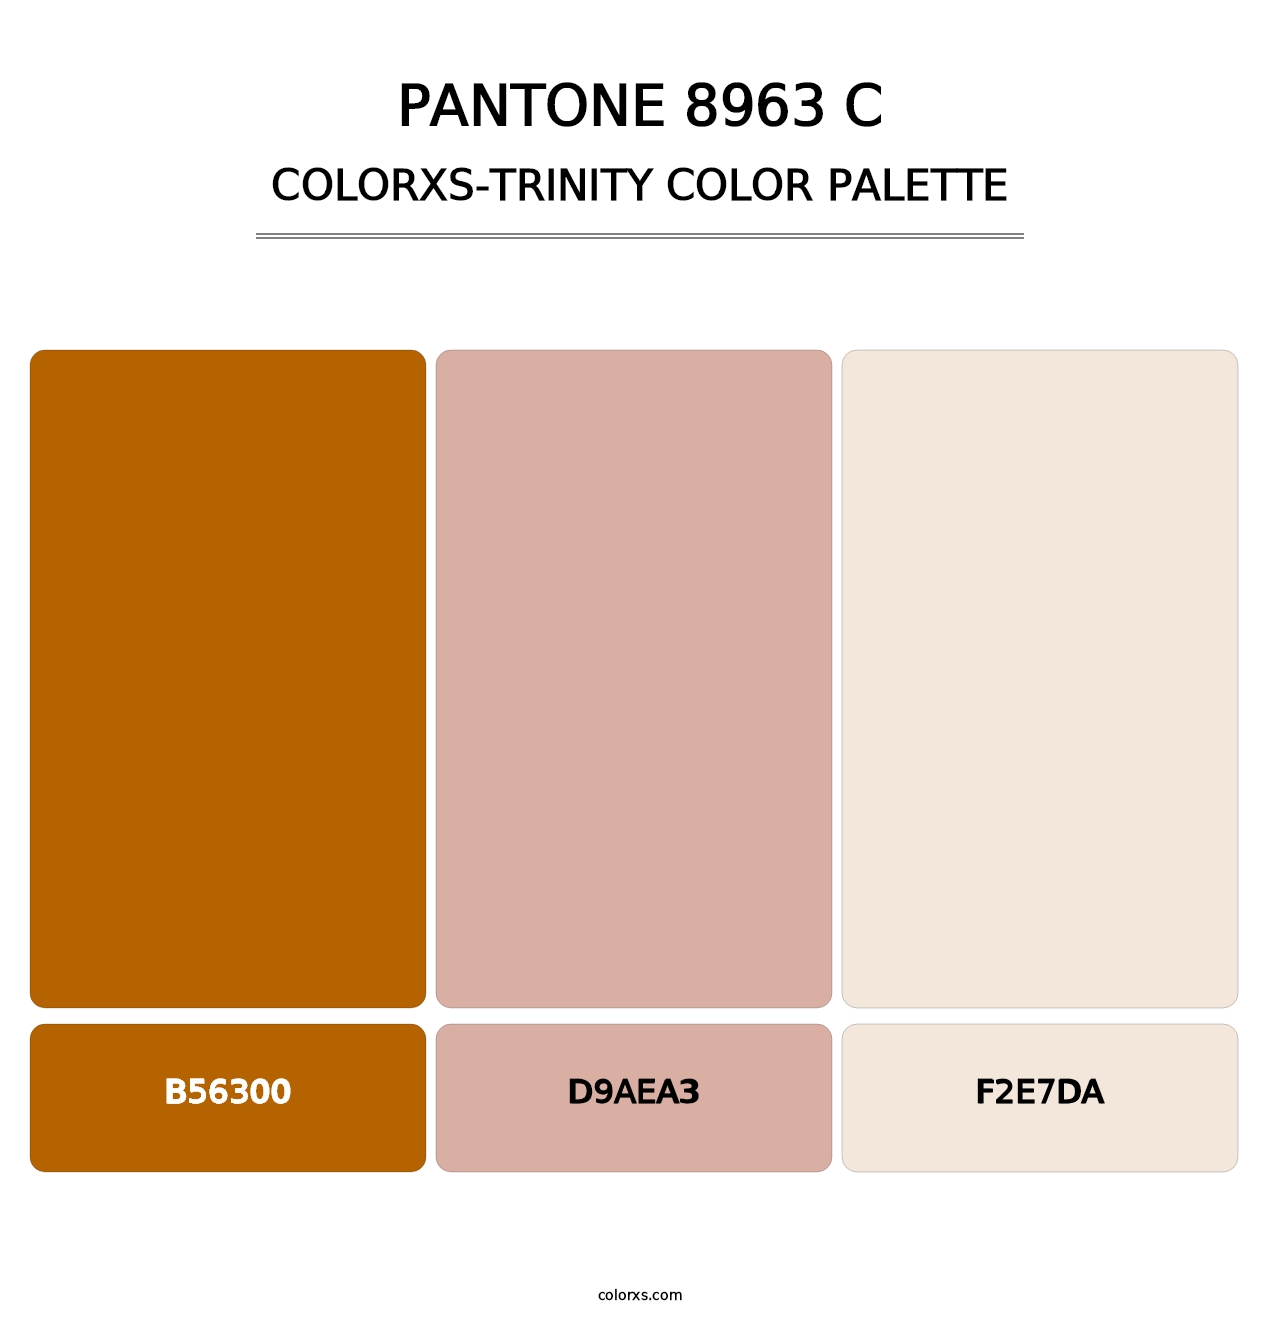 PANTONE 8963 C - Colorxs Trinity Palette